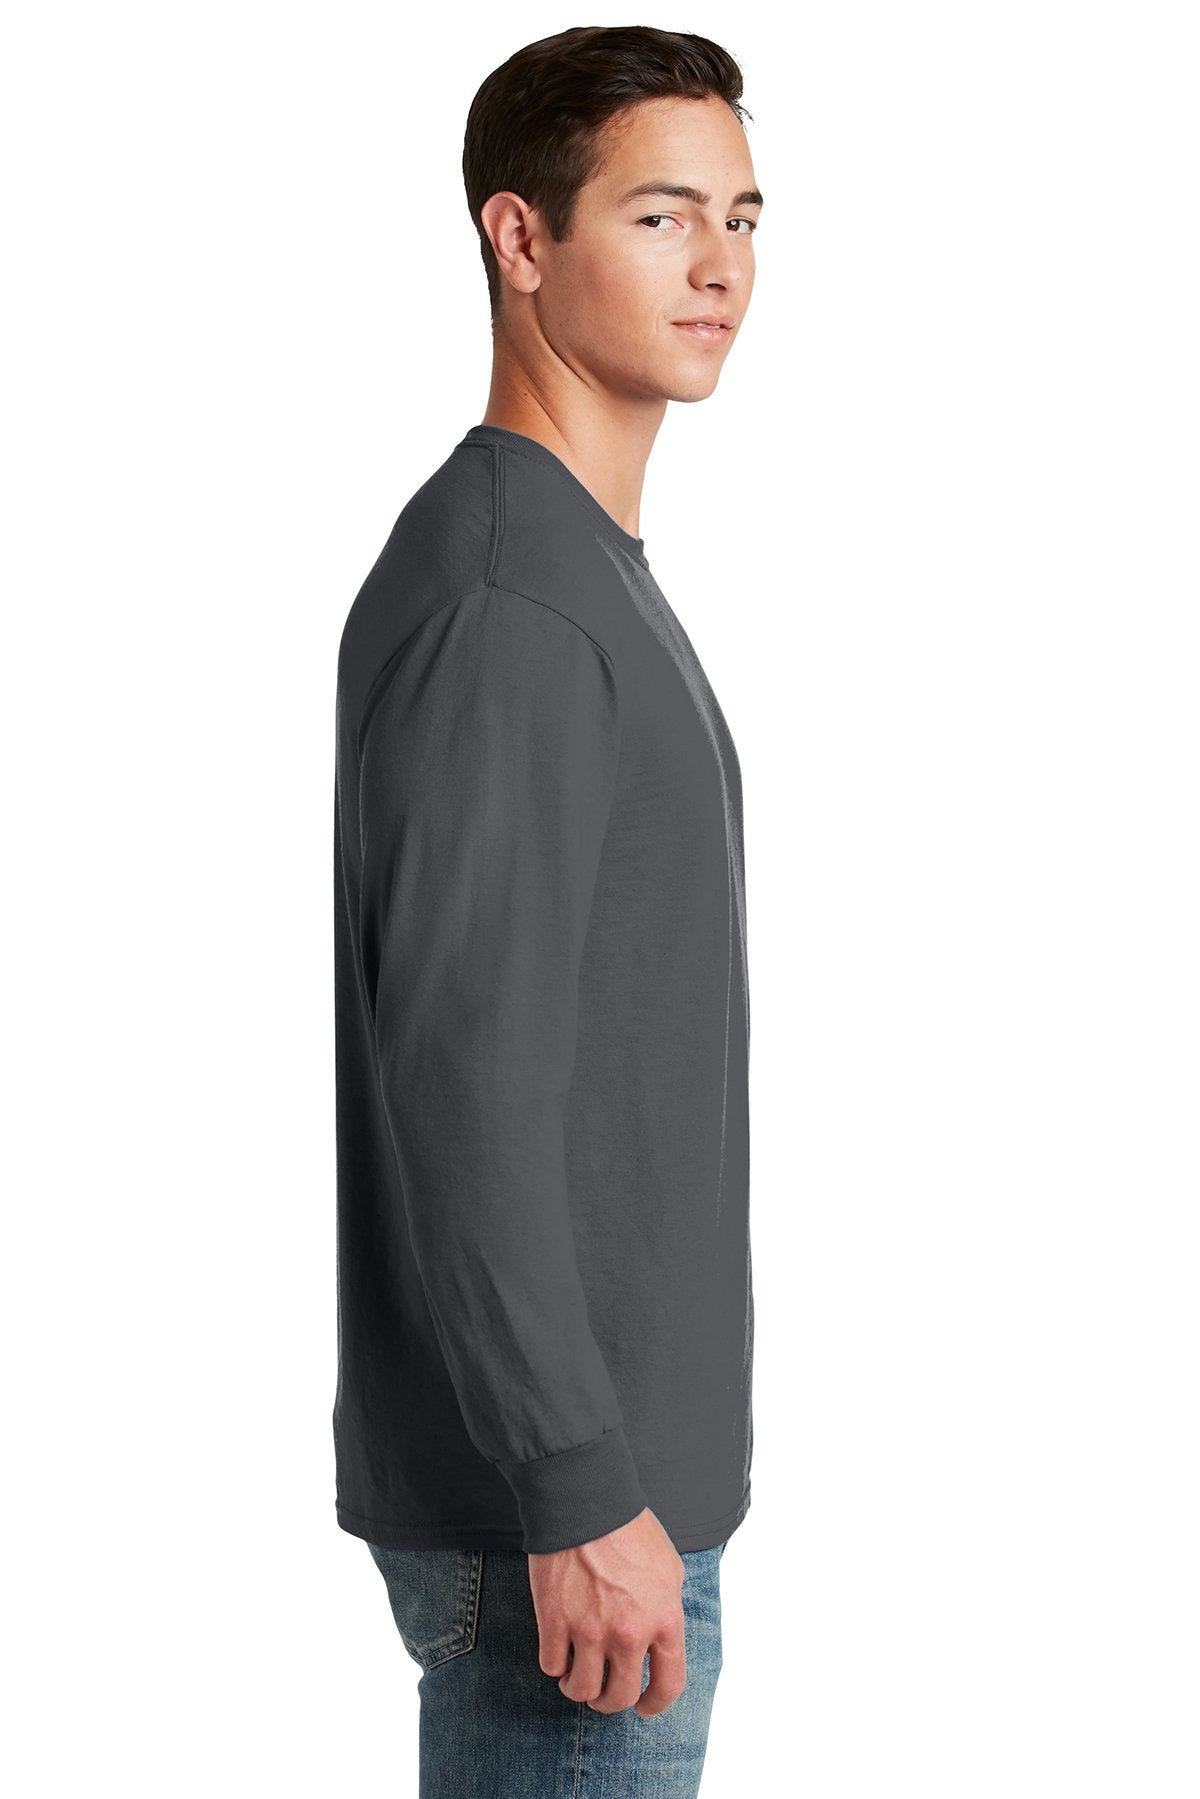 Jerzees Dri-Power 50/50 Cotton/Poly Long Sleeve T-Shirt 29LS Charcoal Grey